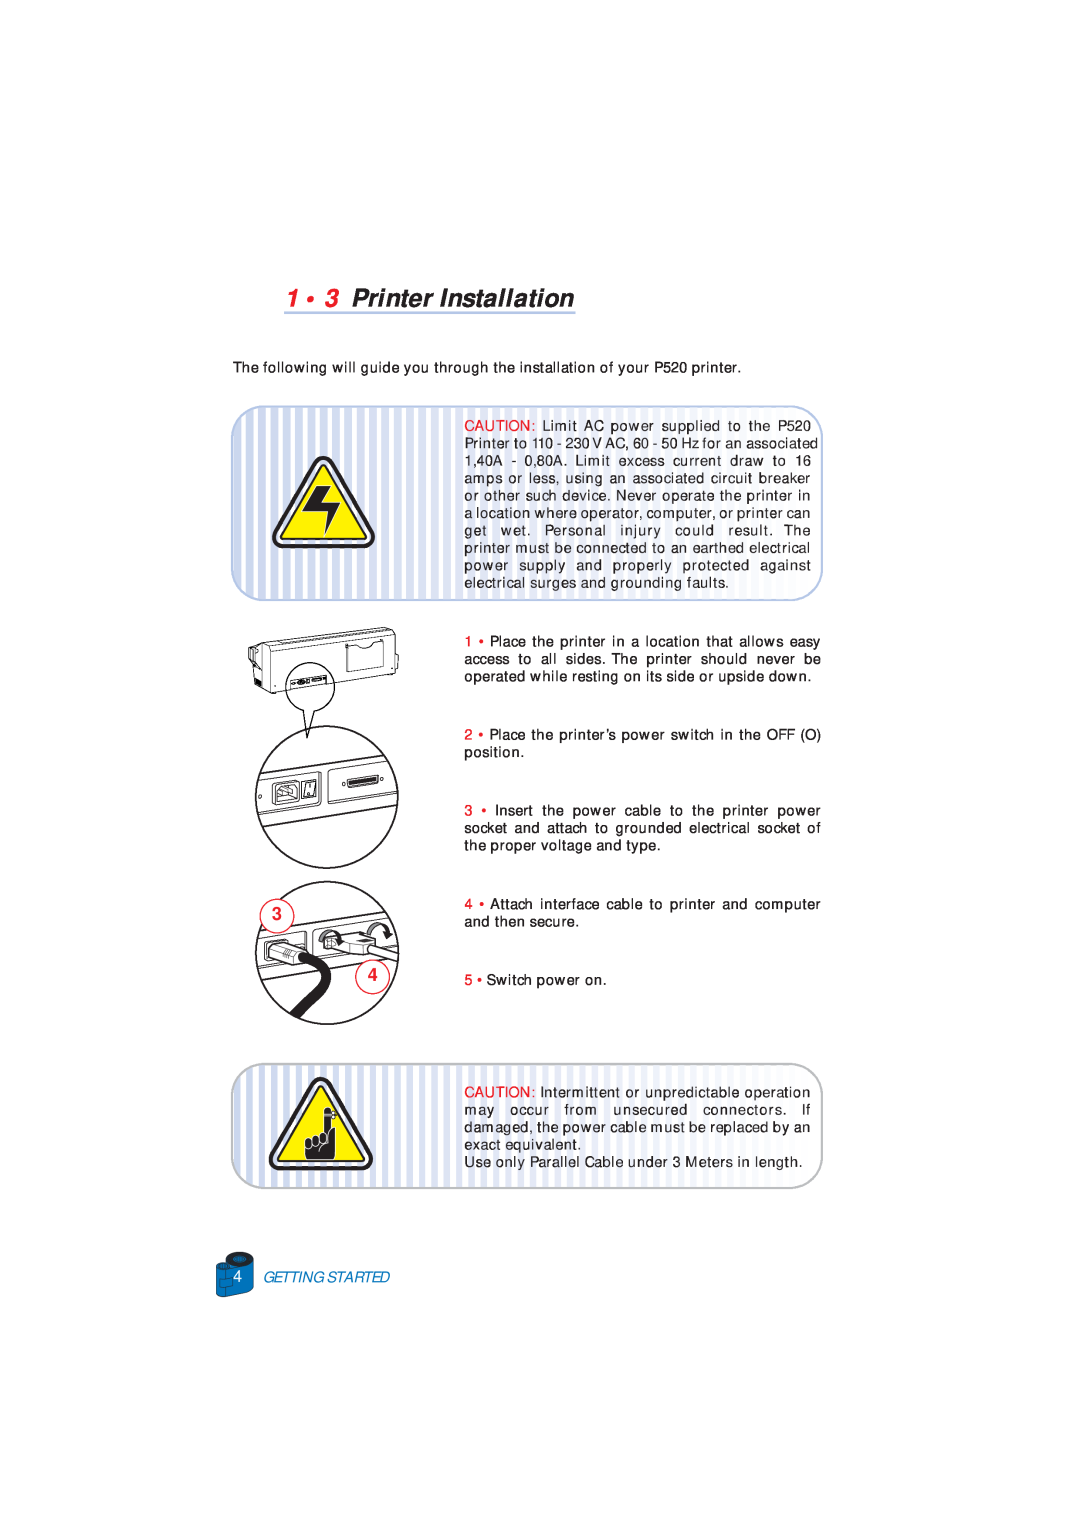 Zebra Technologies P520 user manual 1 3 Printer Installation, Getting Started 